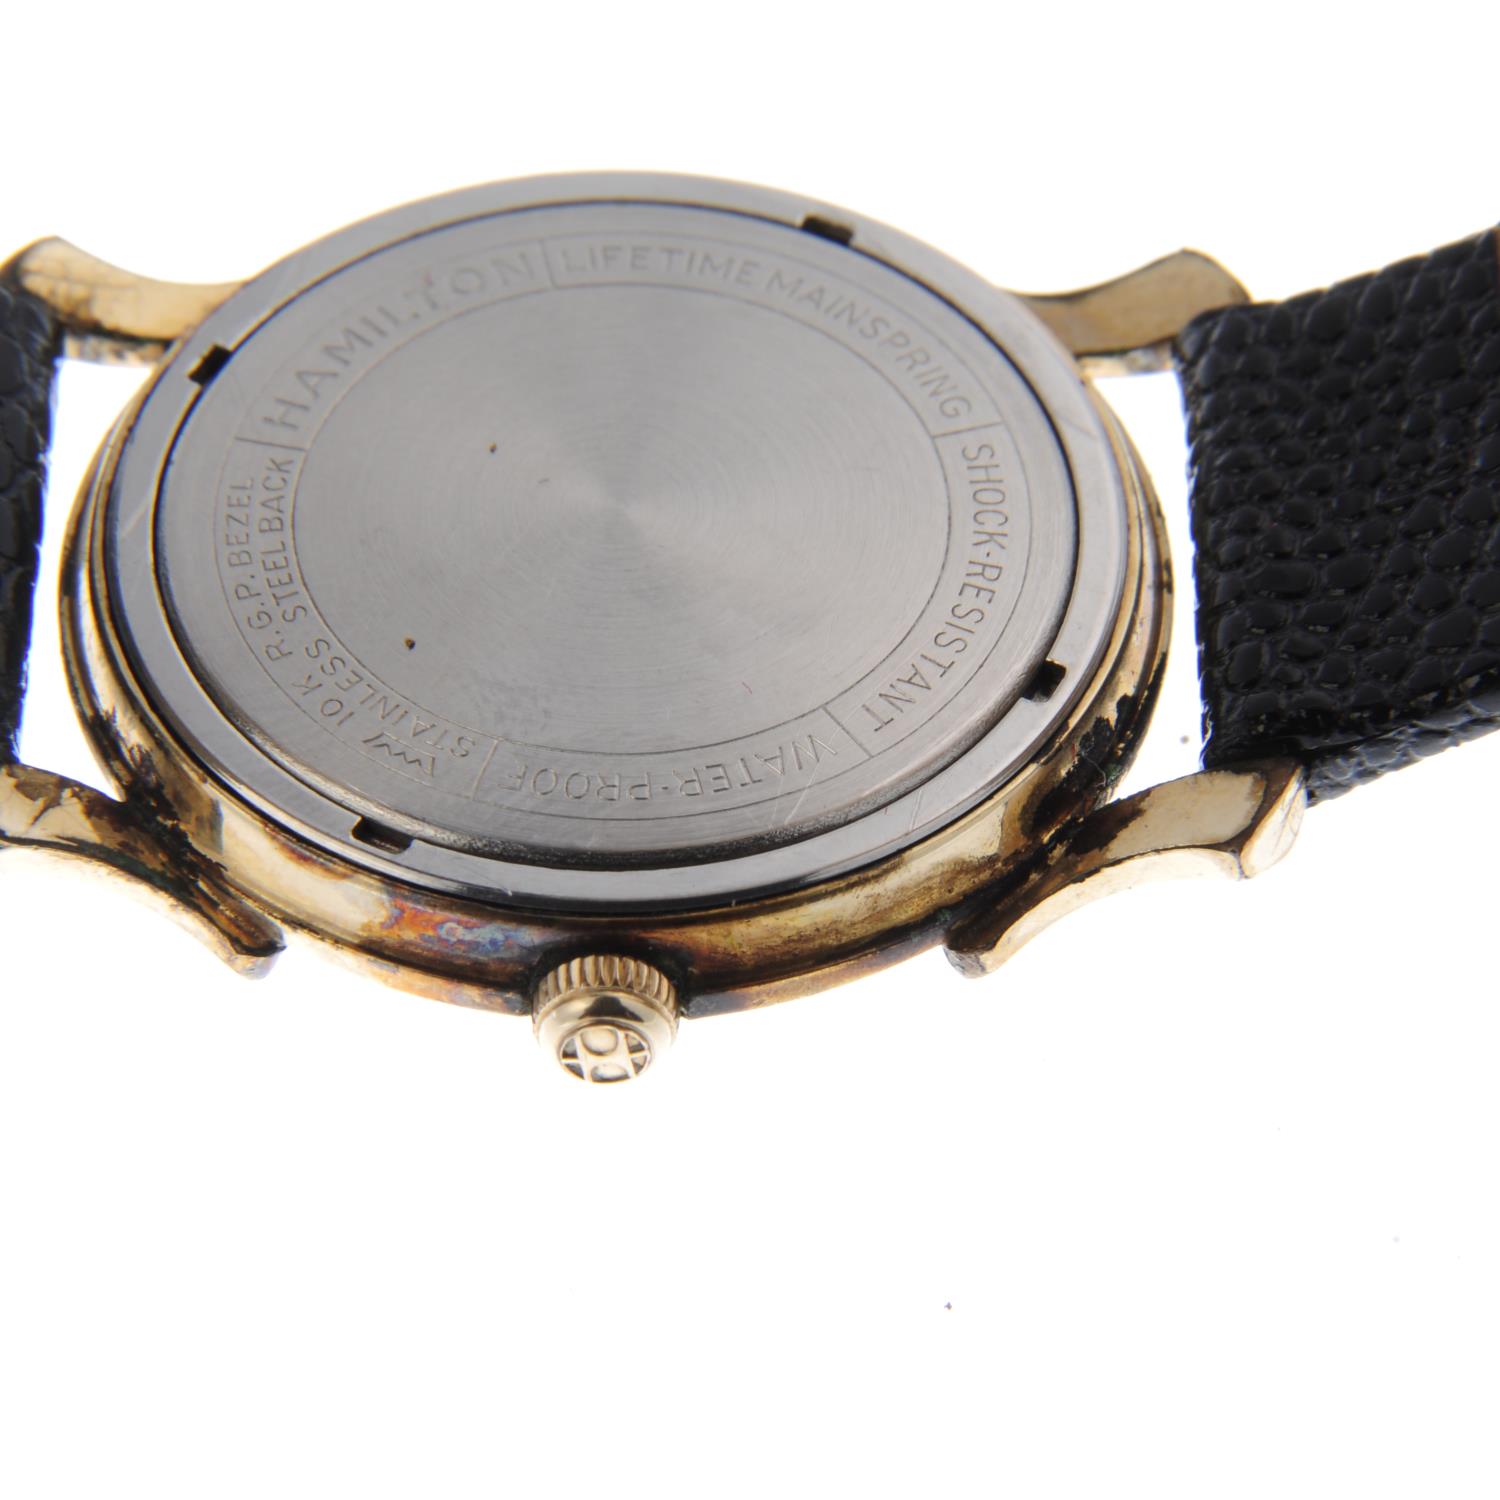 LONGINES - a wrist watch. - Image 7 of 8